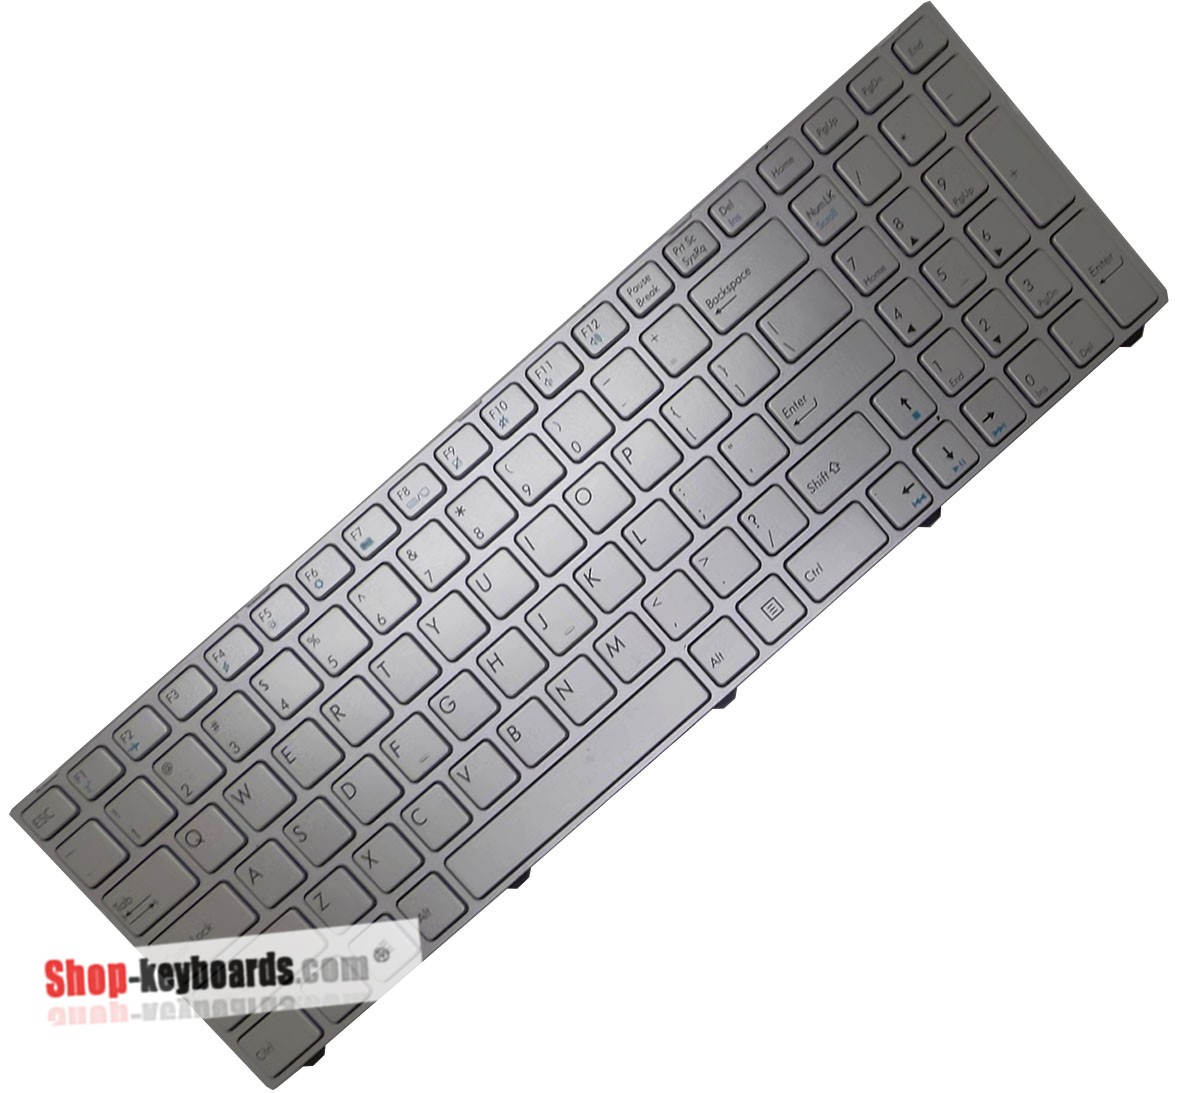 Medion AKOYA E6436 Keyboard replacement